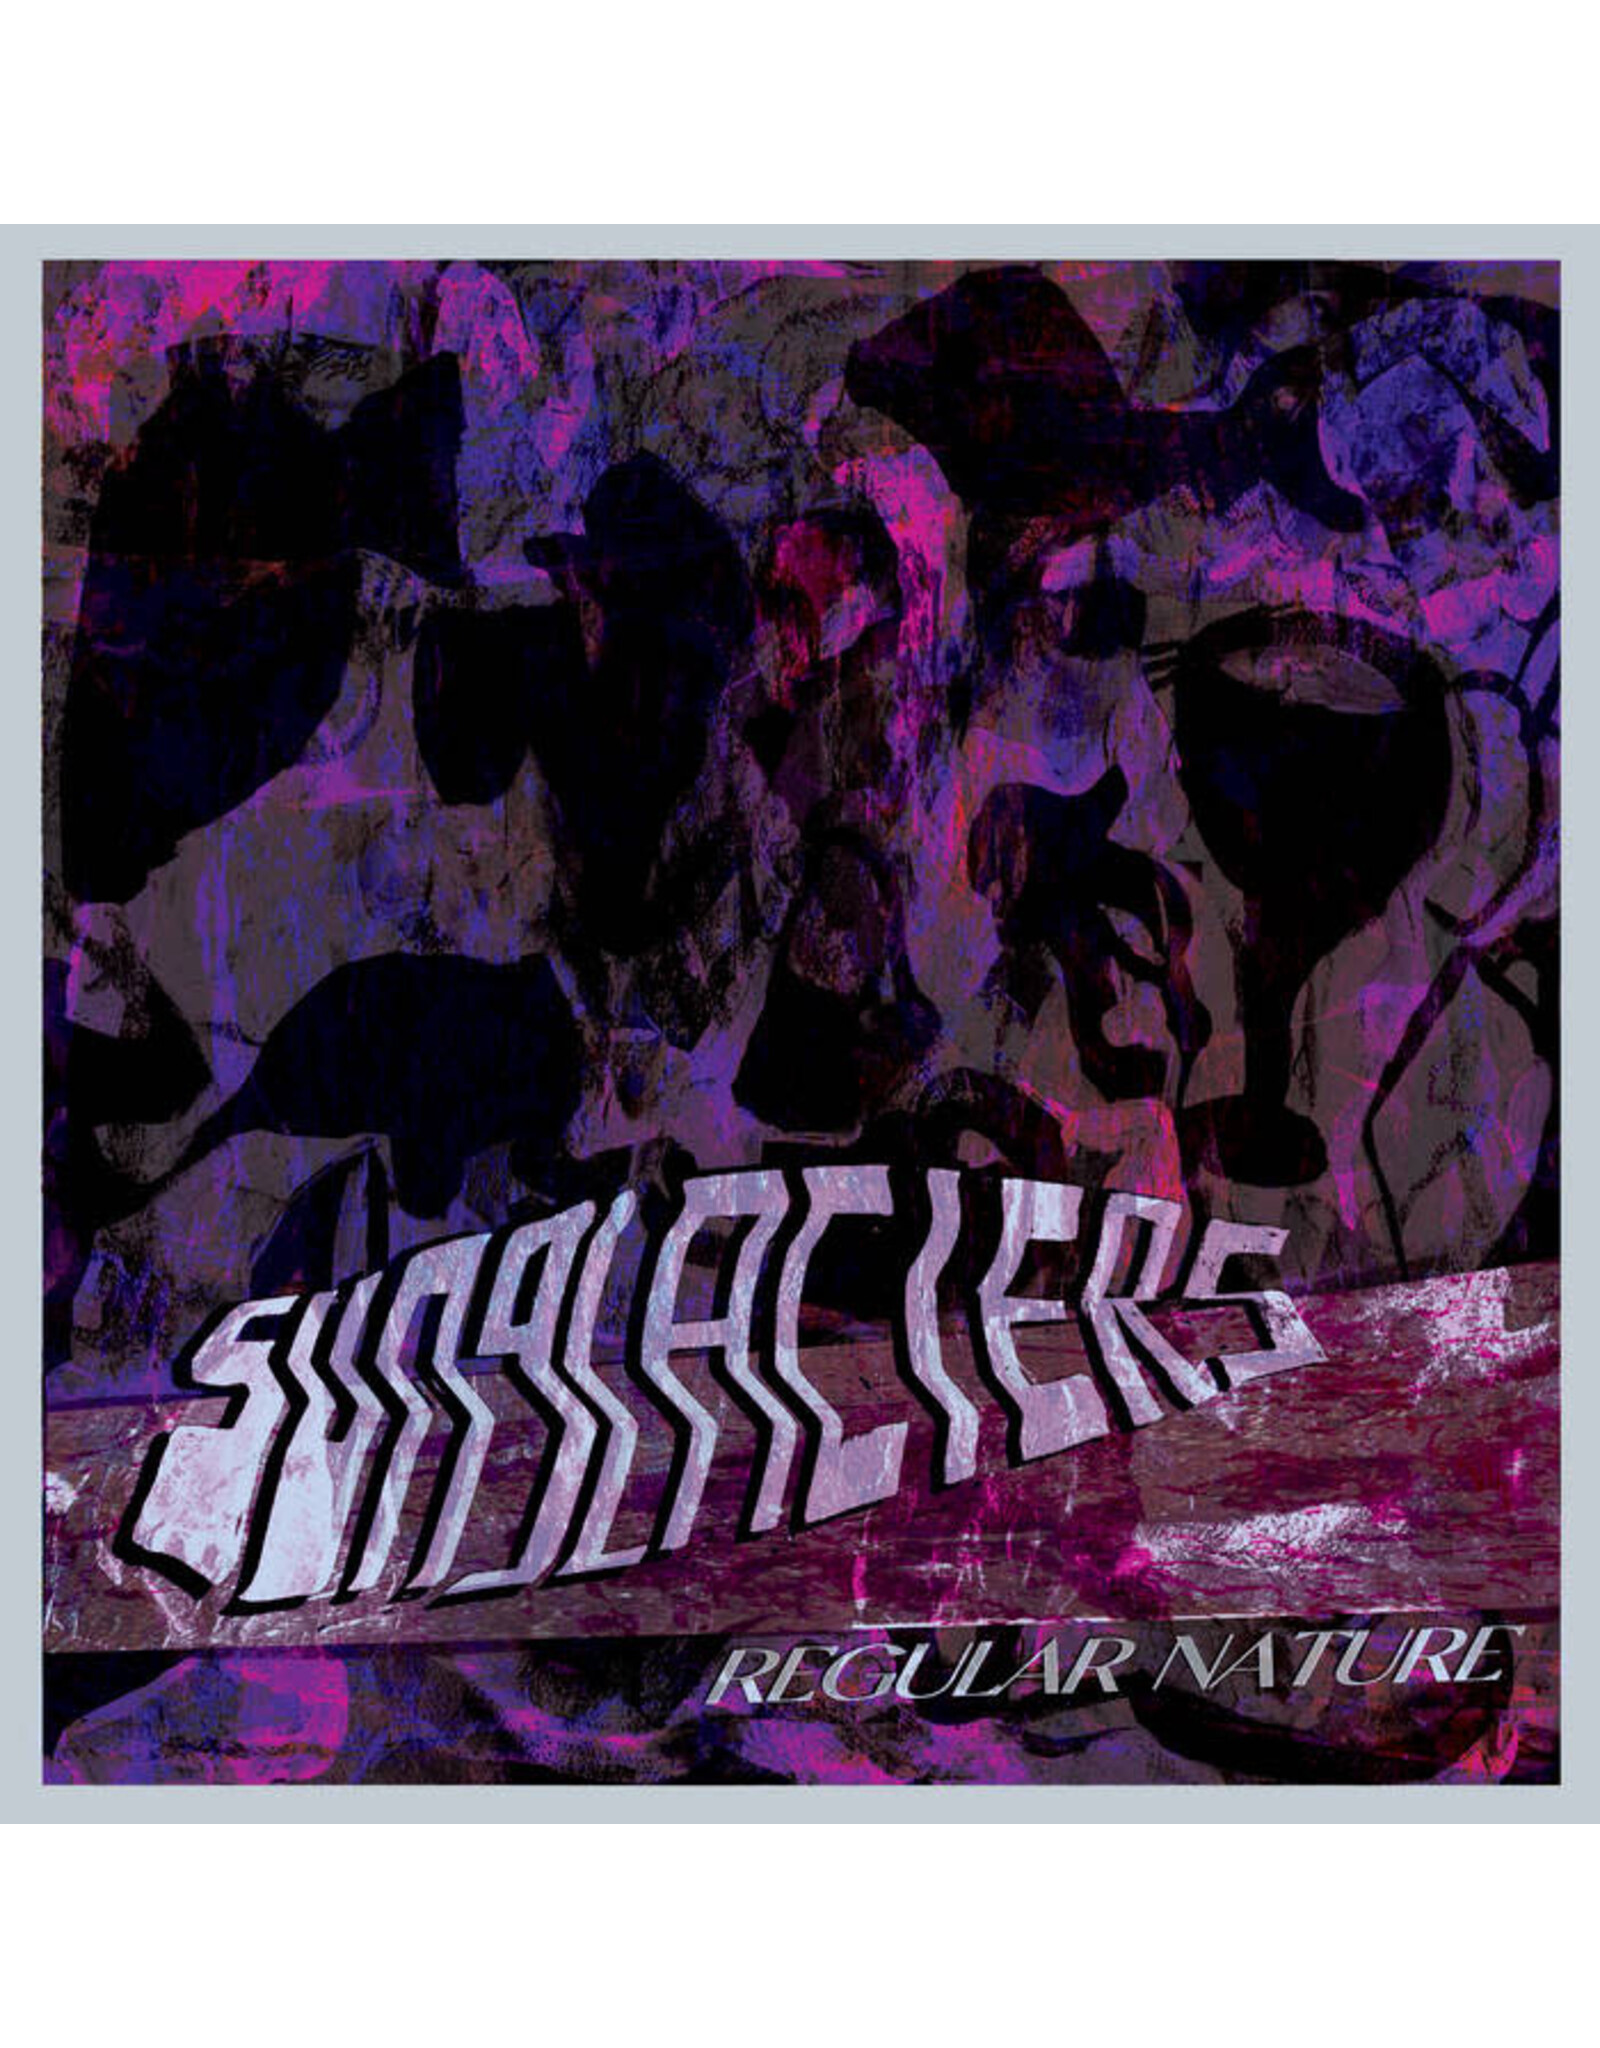 Mothland Sunglaciers: Regular Nature (180g purple brain splatter) LP